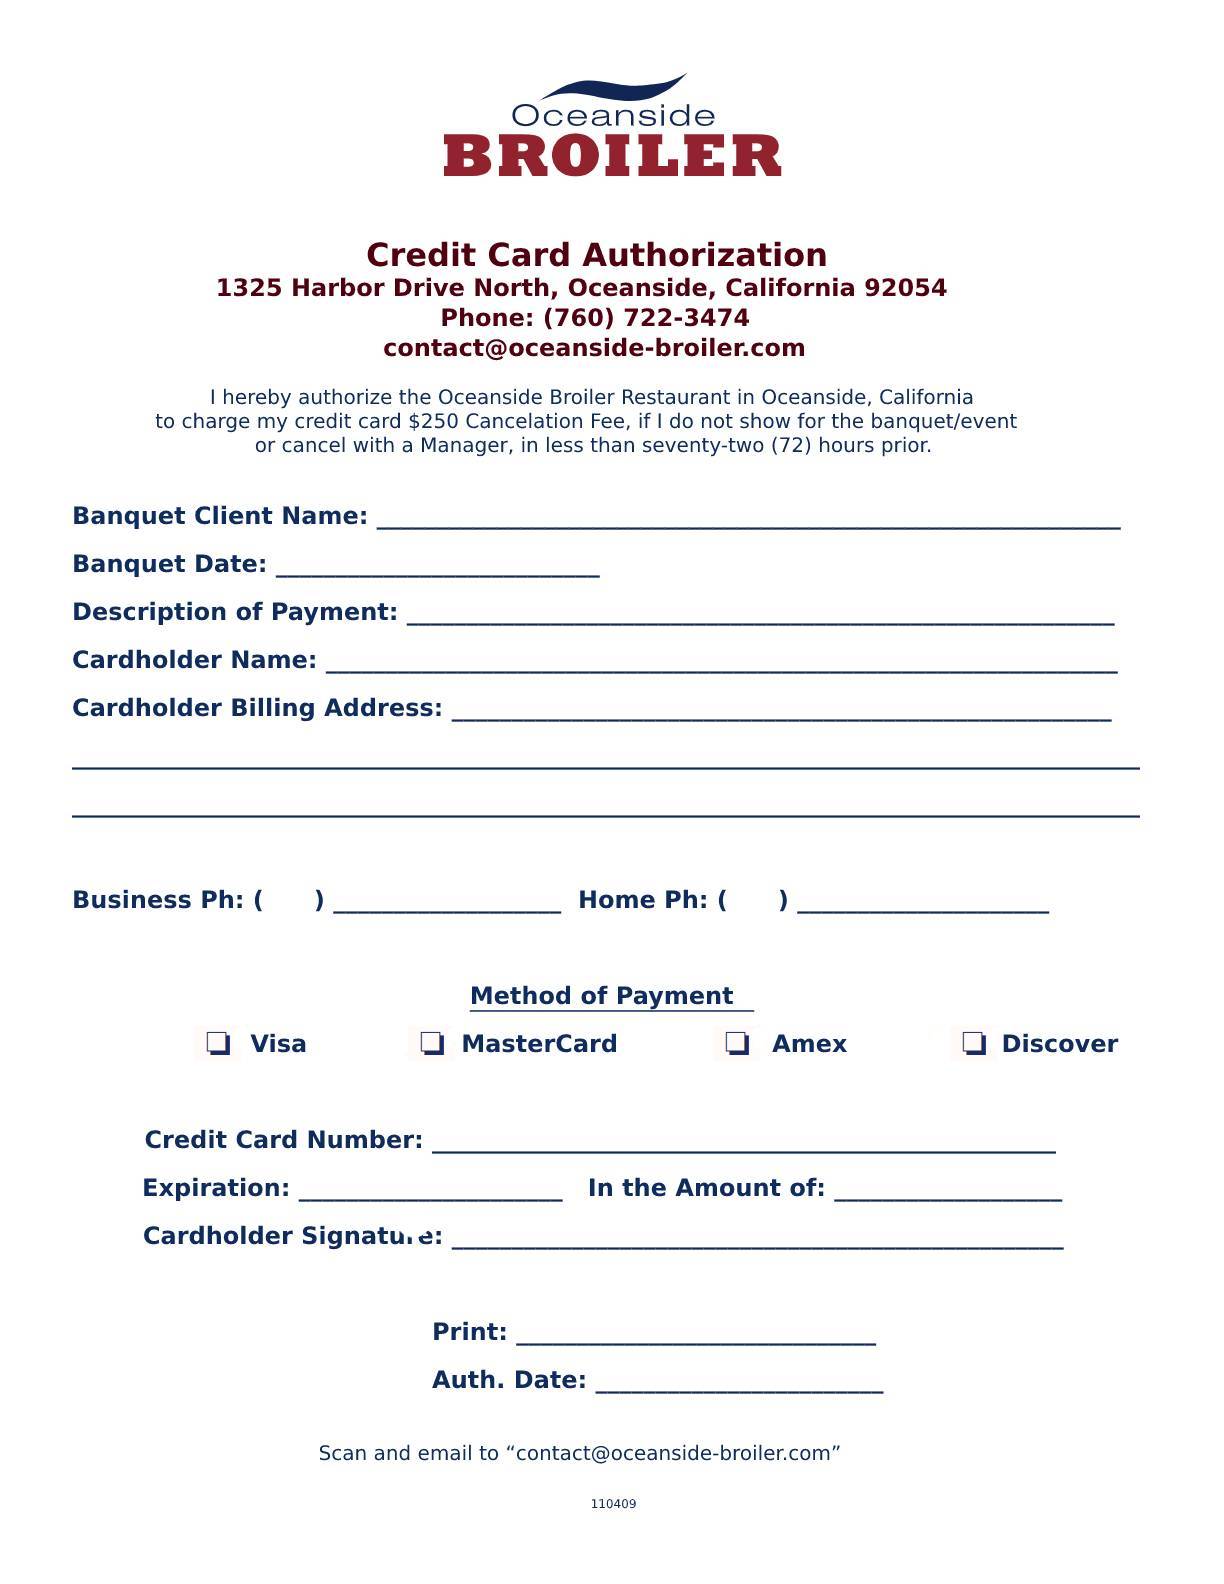 Banquet Credit Card Authorization